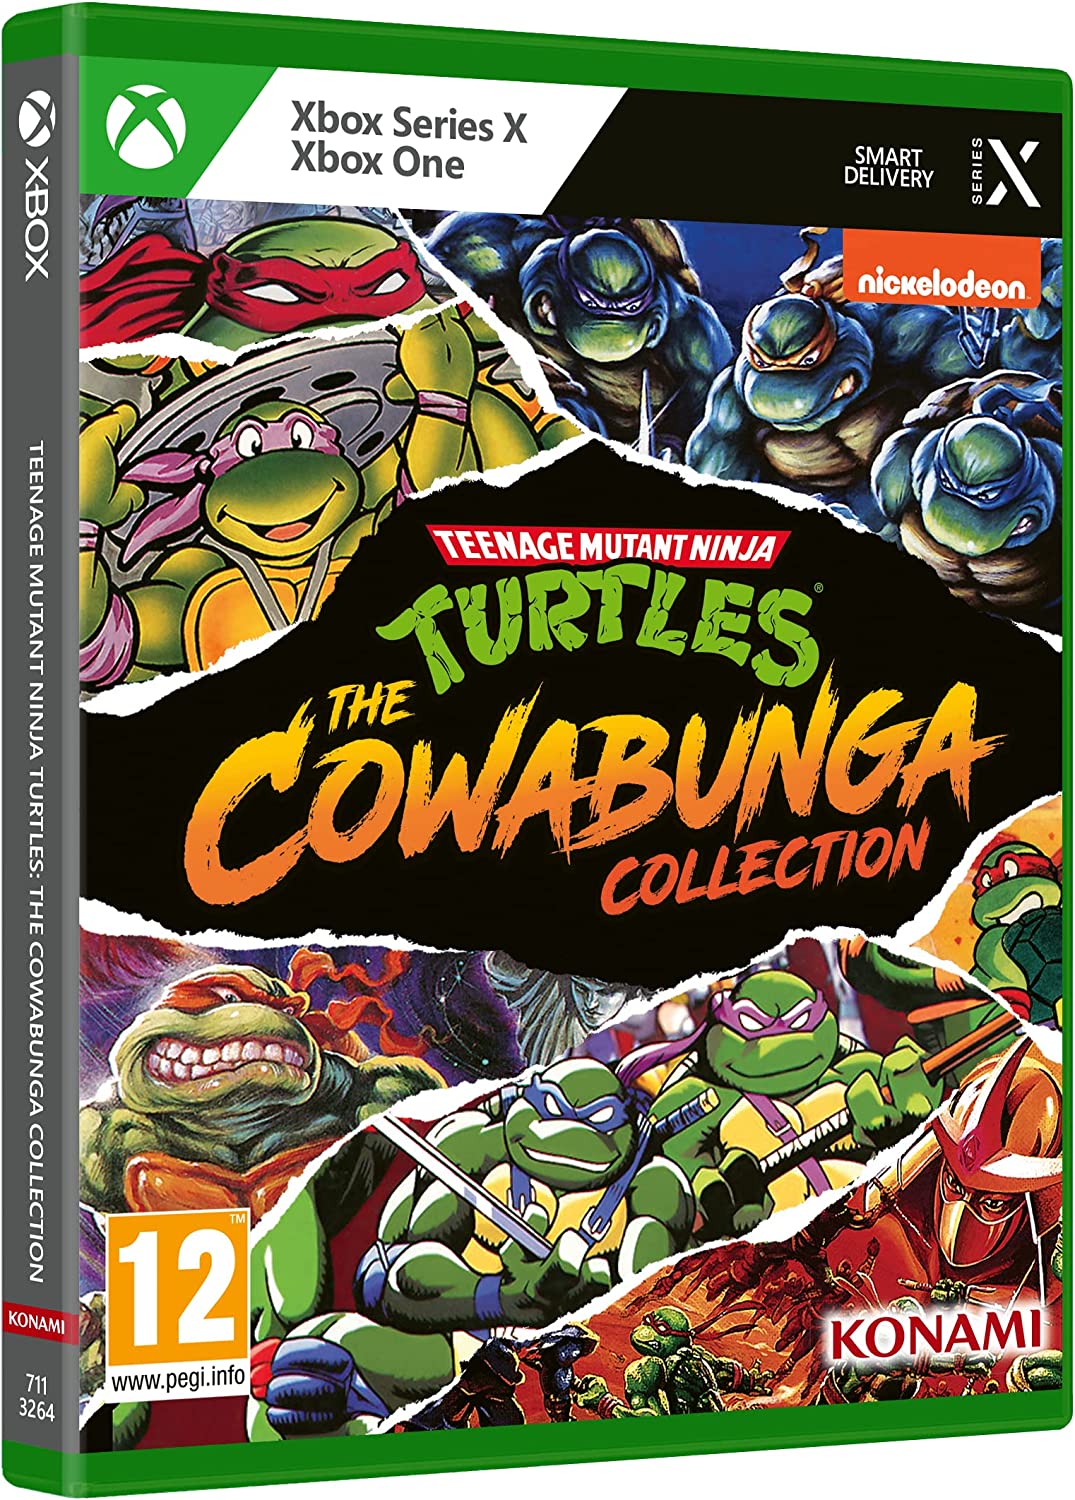 Mutant Xbox Series Download) Collection Turtles: X|S Key for Ninja Cowabunga Teenage (Digital CD The